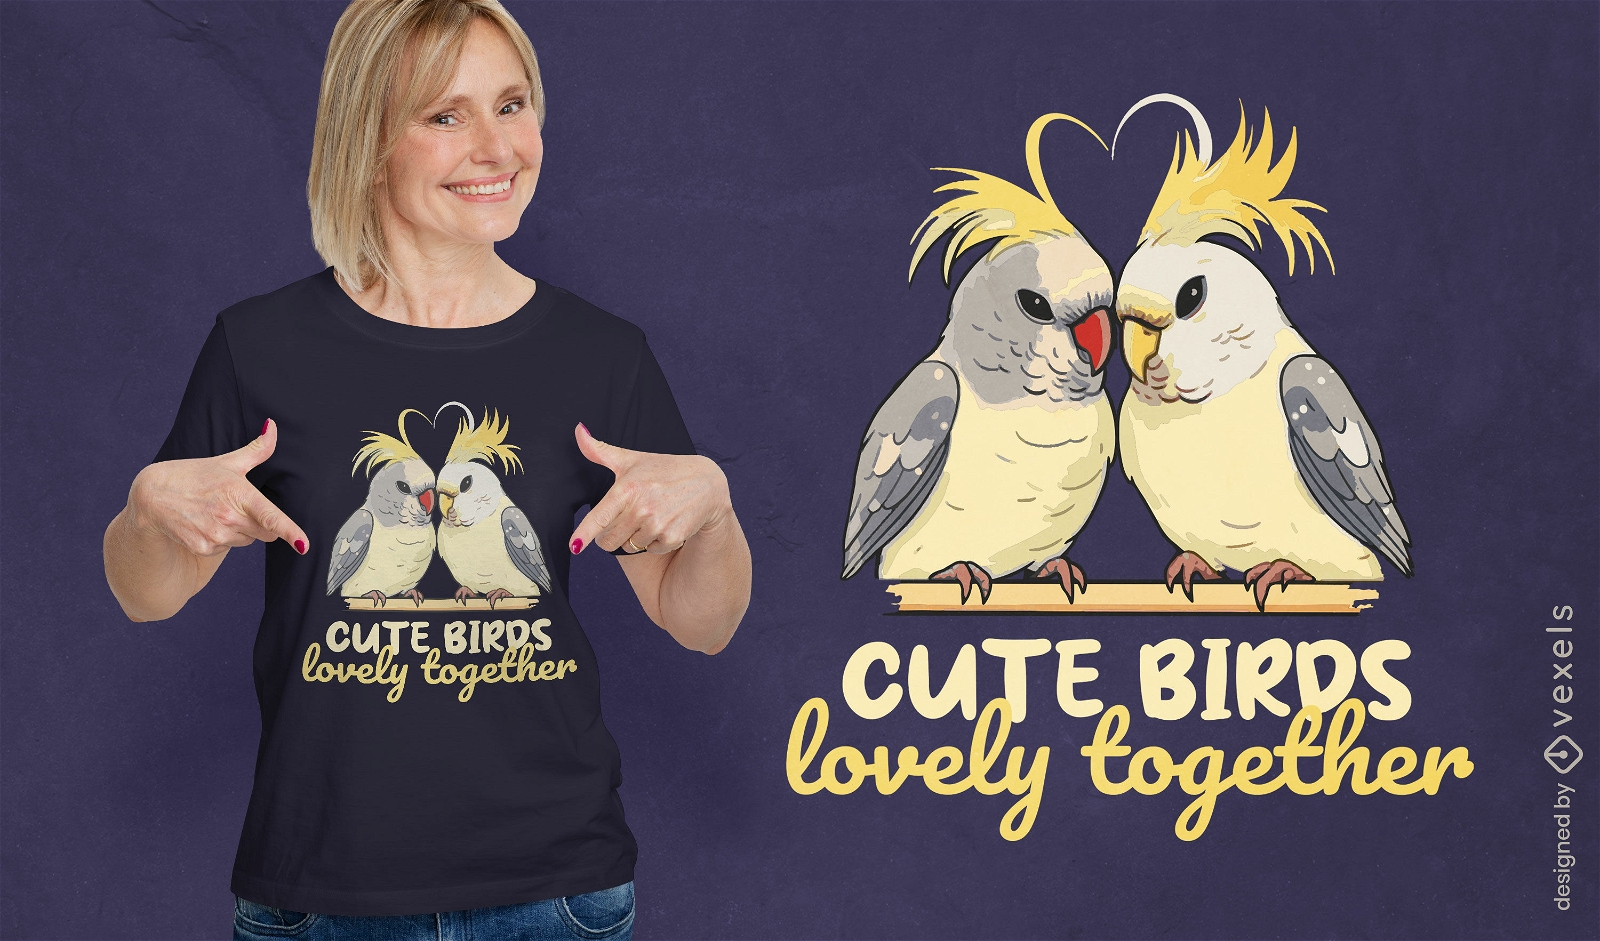 Cute birds lovely together t-shirt design